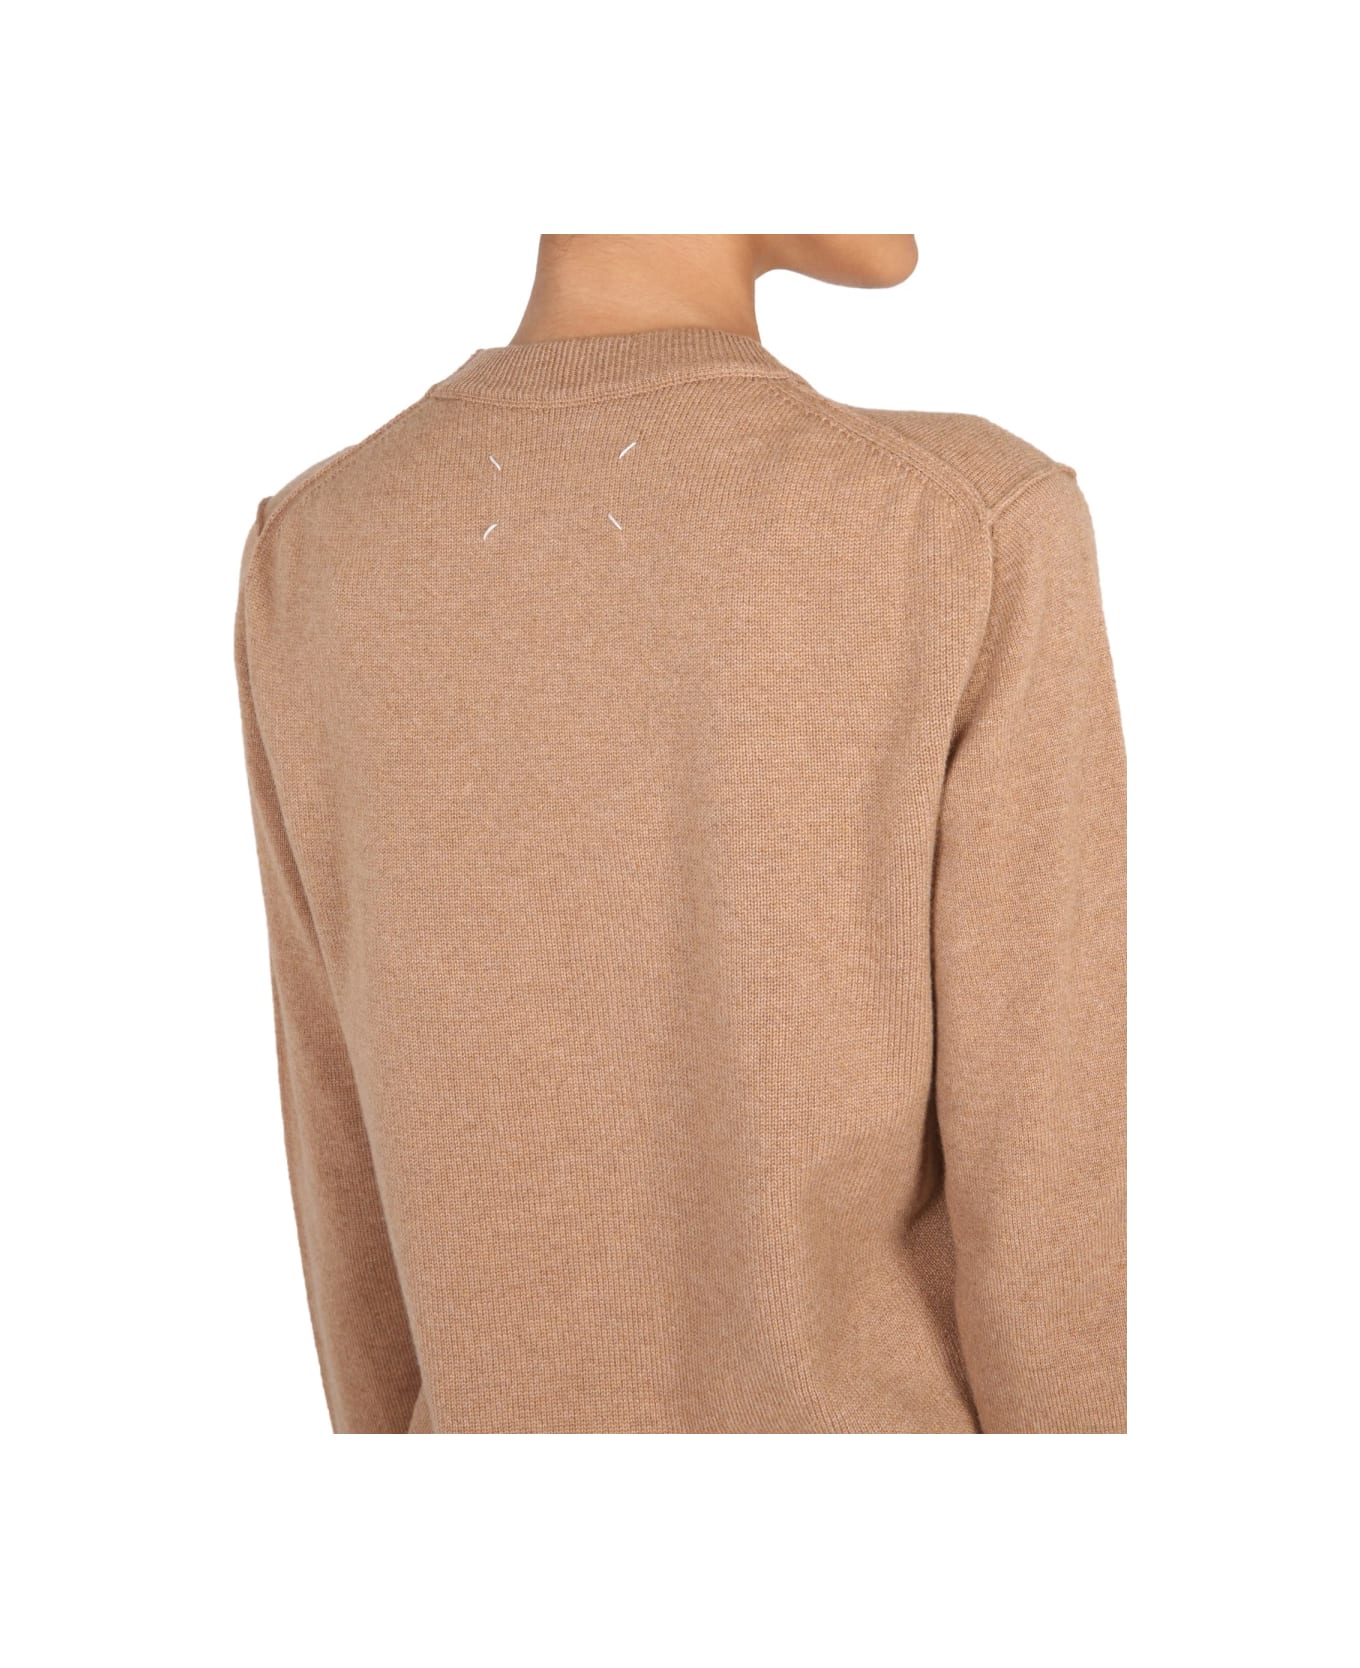 Maison Margiela Cashmere Sweater - BEIGE